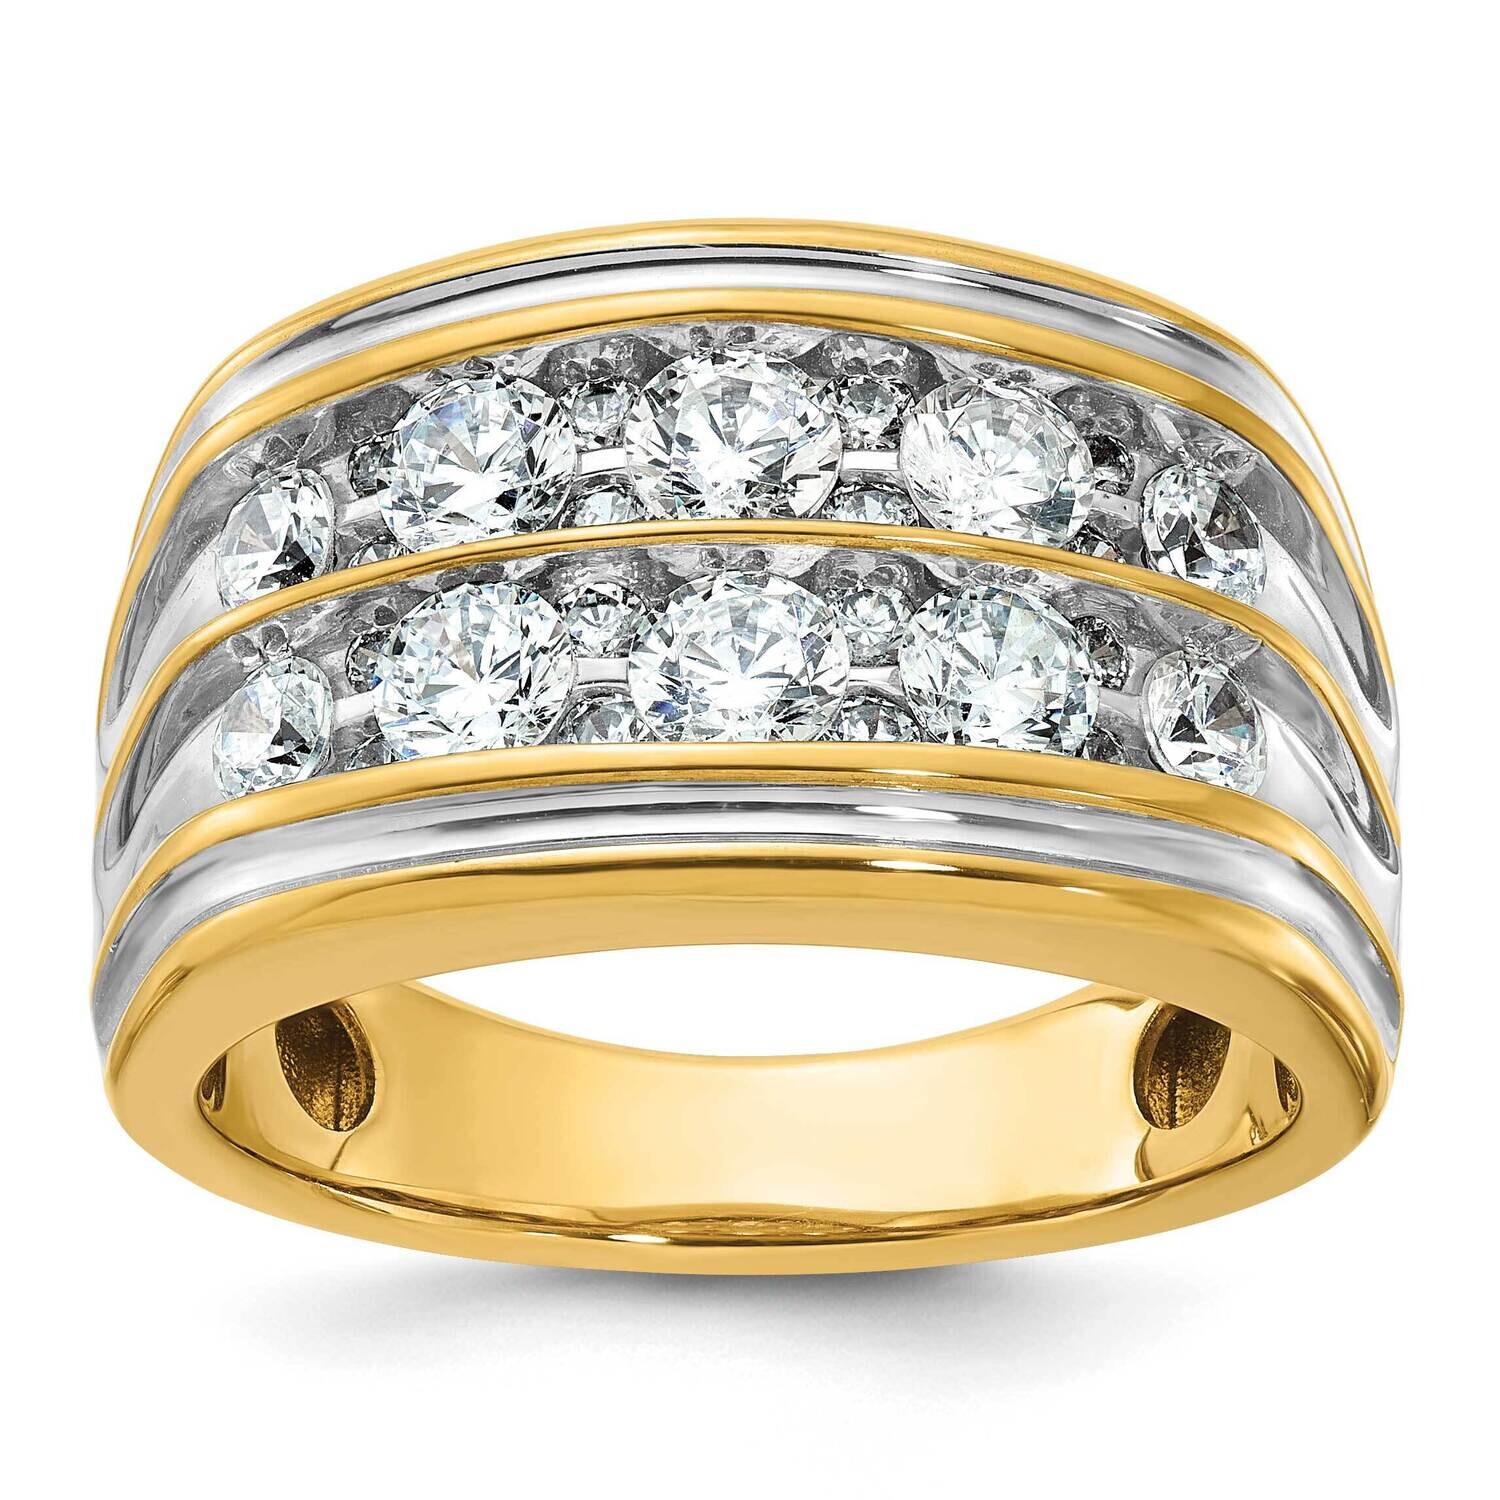 Ibgoodman Men's Polished Grooved 2-Row 2 Carat Aa Quality Diamond Ring 14k Gold White Rhodium B64246-4YWAA